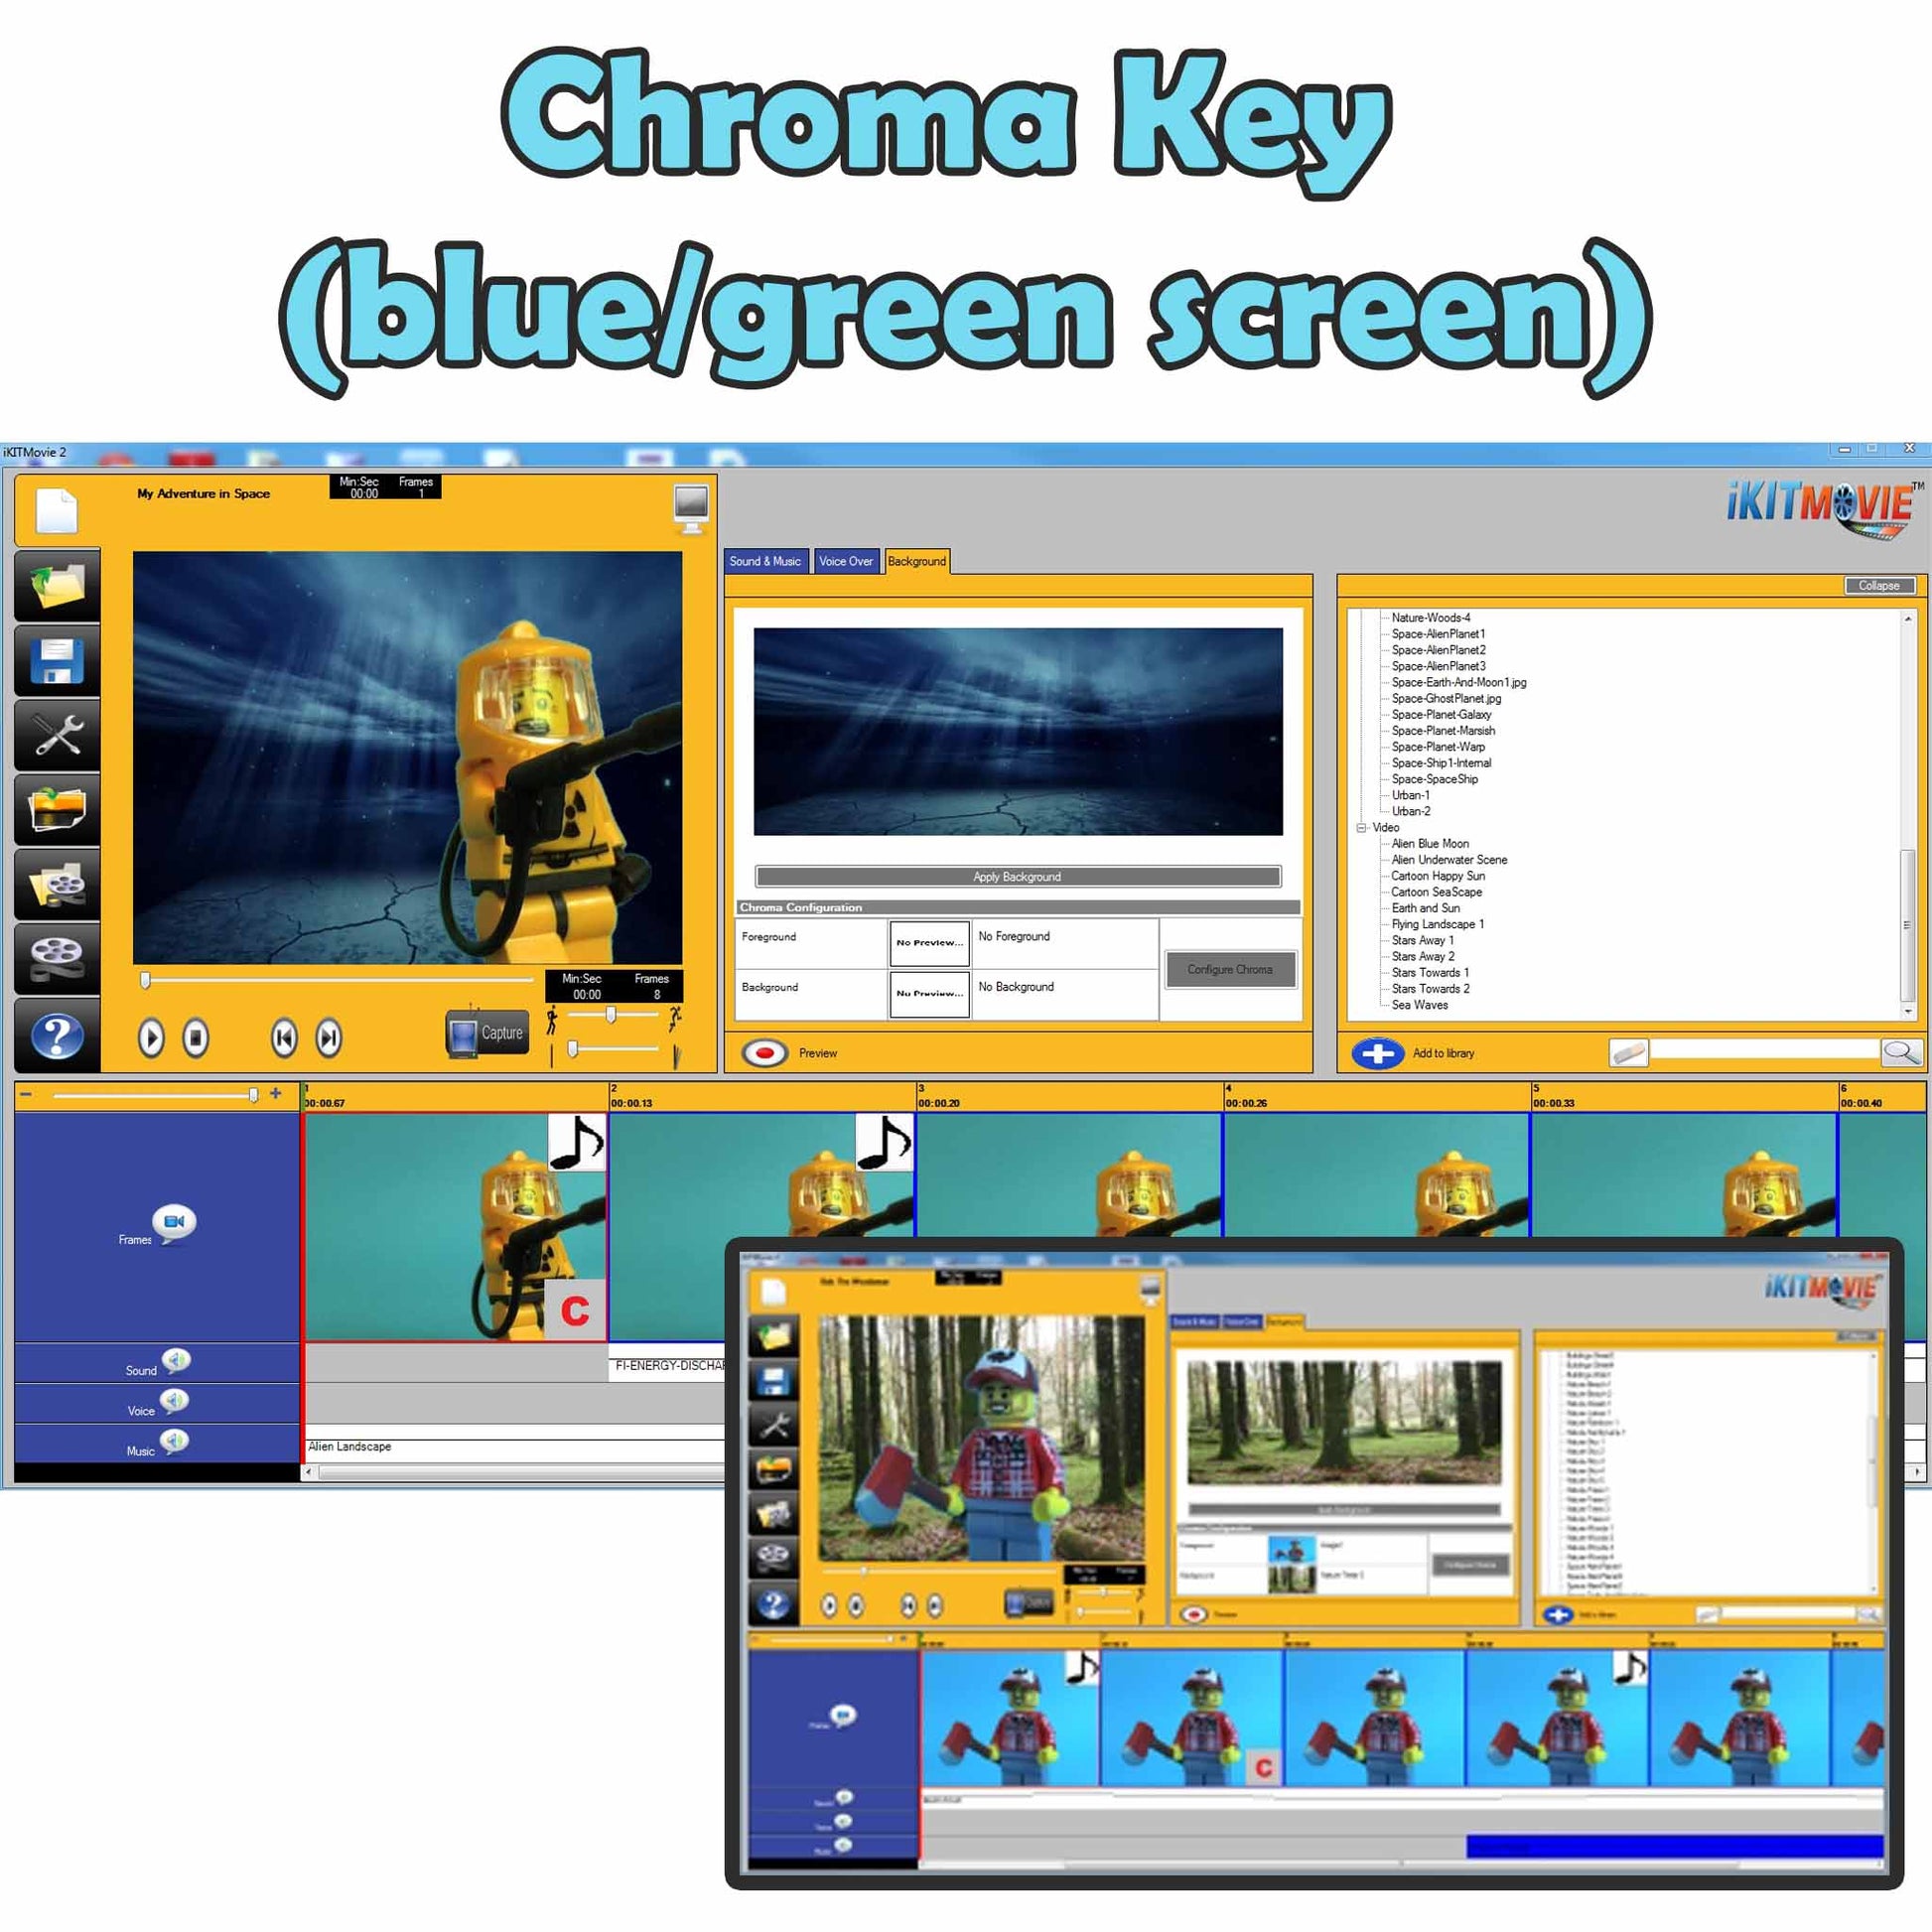 iKITMovie Full Feature Stop Motion Capture Software Chroma Key